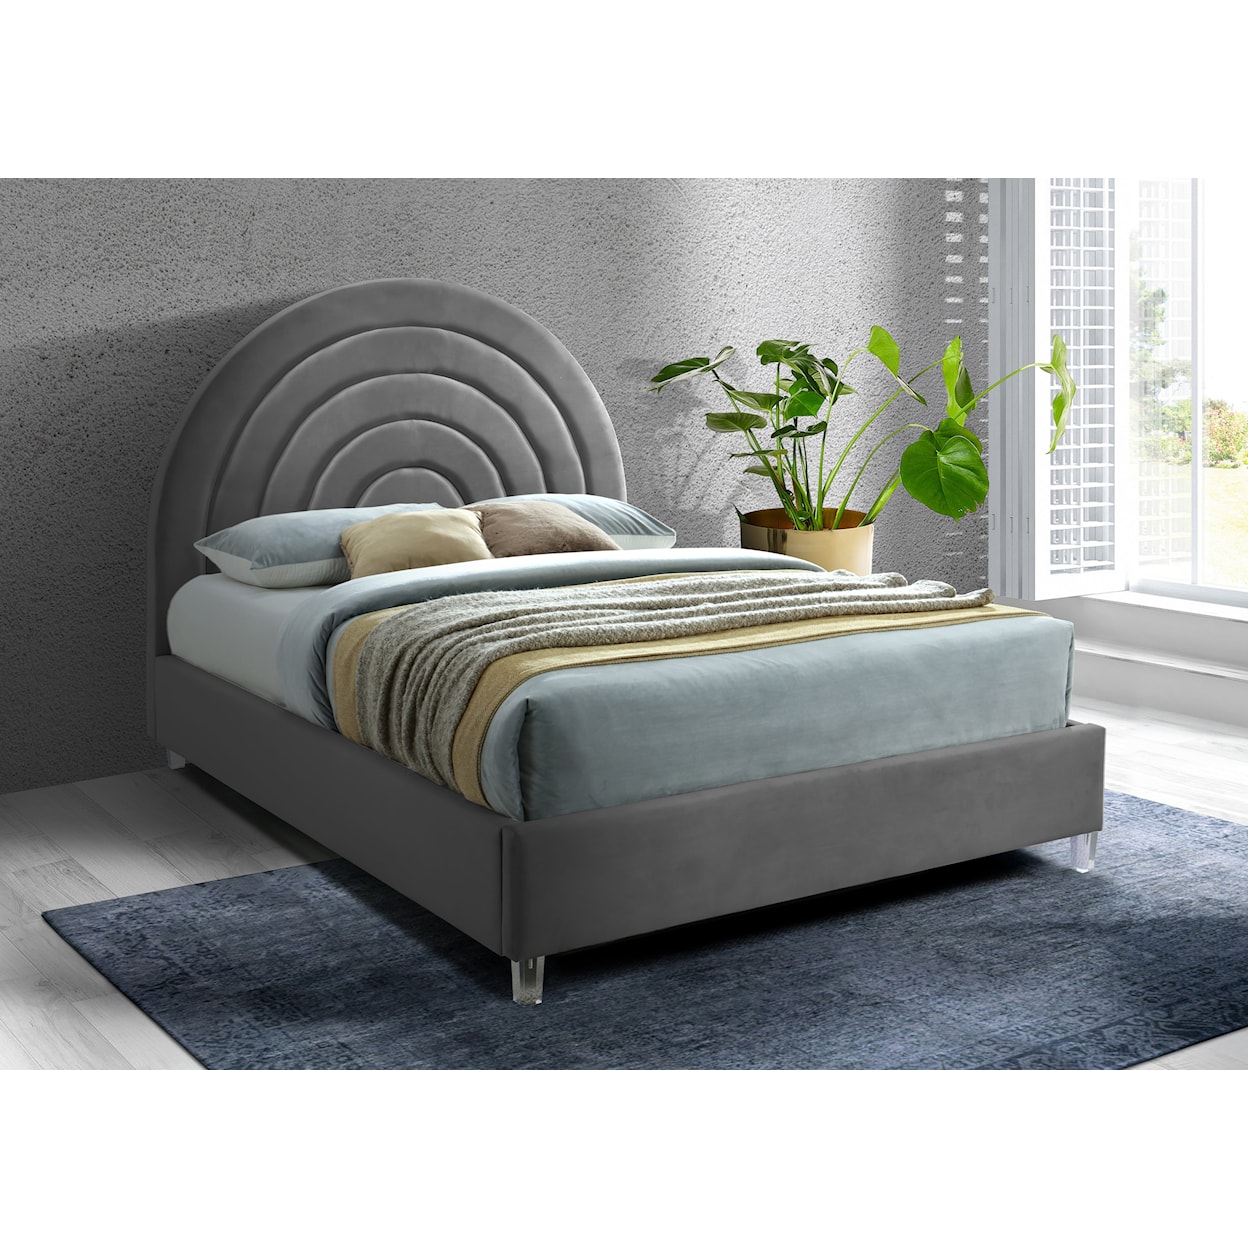 Meridian Furniture Rainbow Full Bed